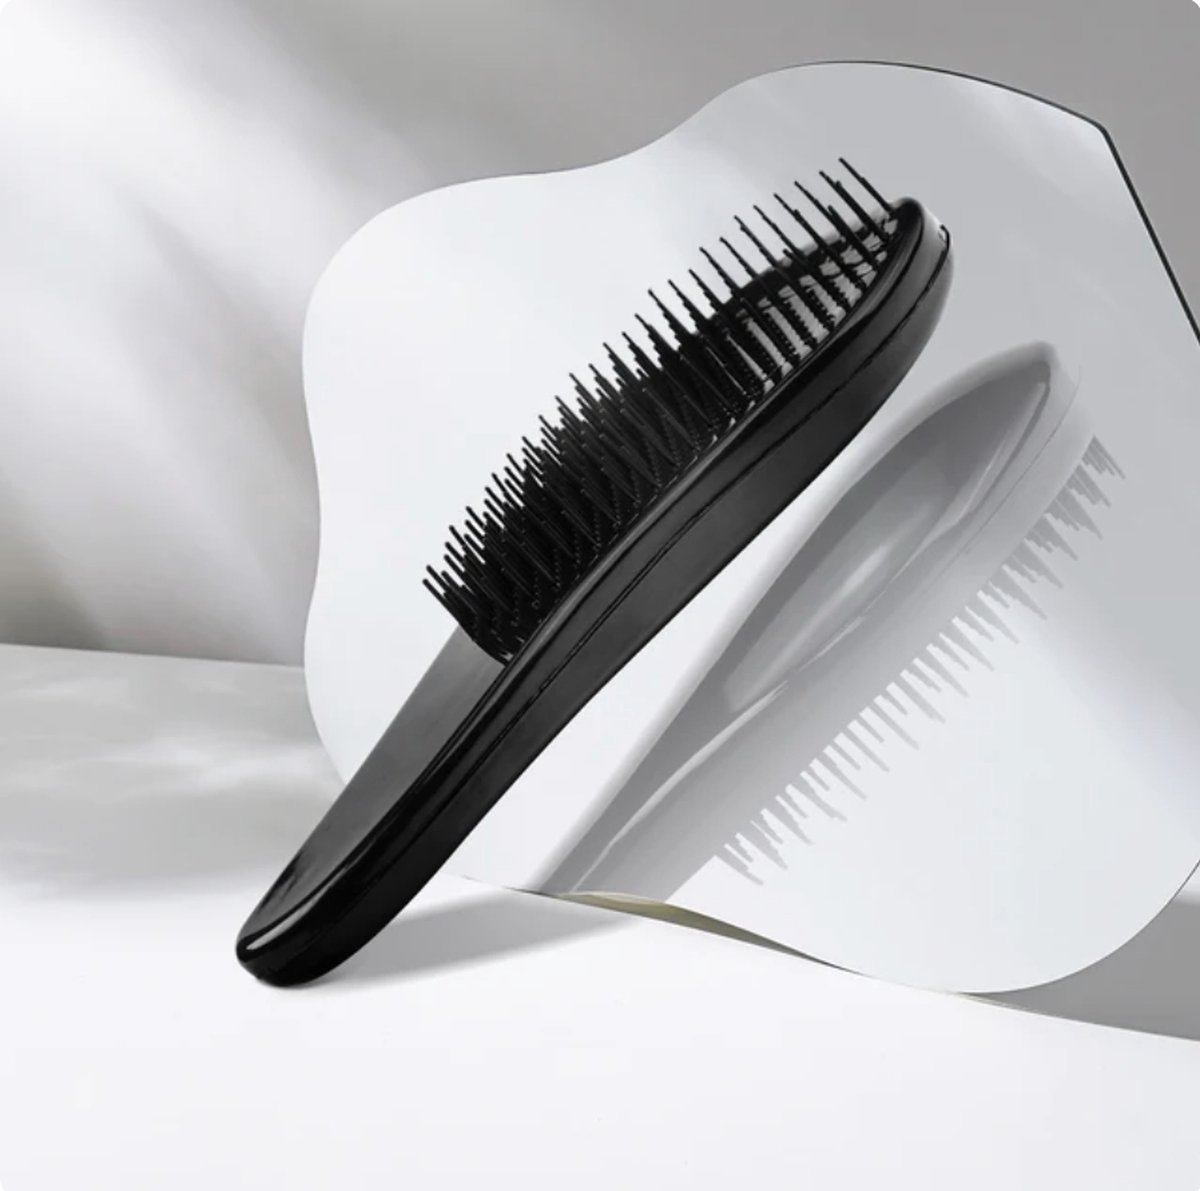 Anti klit borstel - Haarborstel - Detangling Brush - Diverse Kleuren - 18 cm - Merkloos